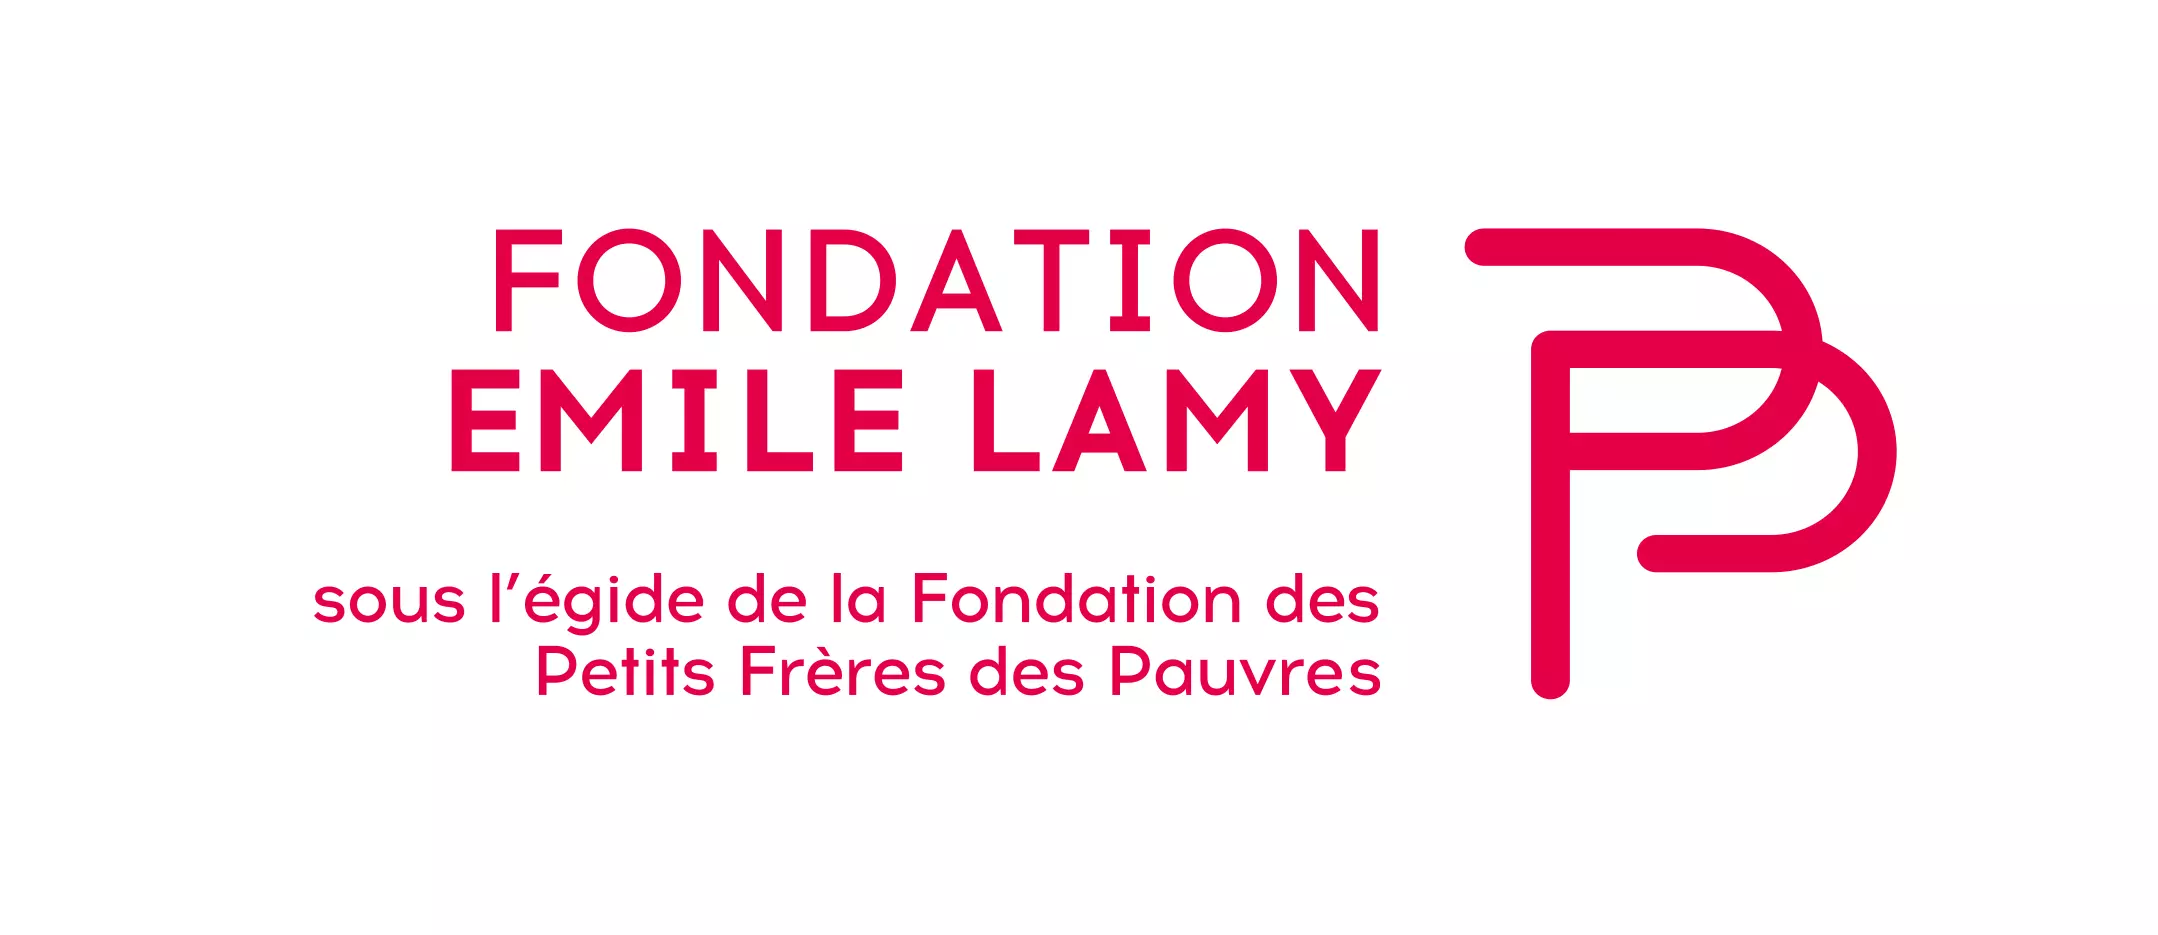 La Fondation Emile Lamy